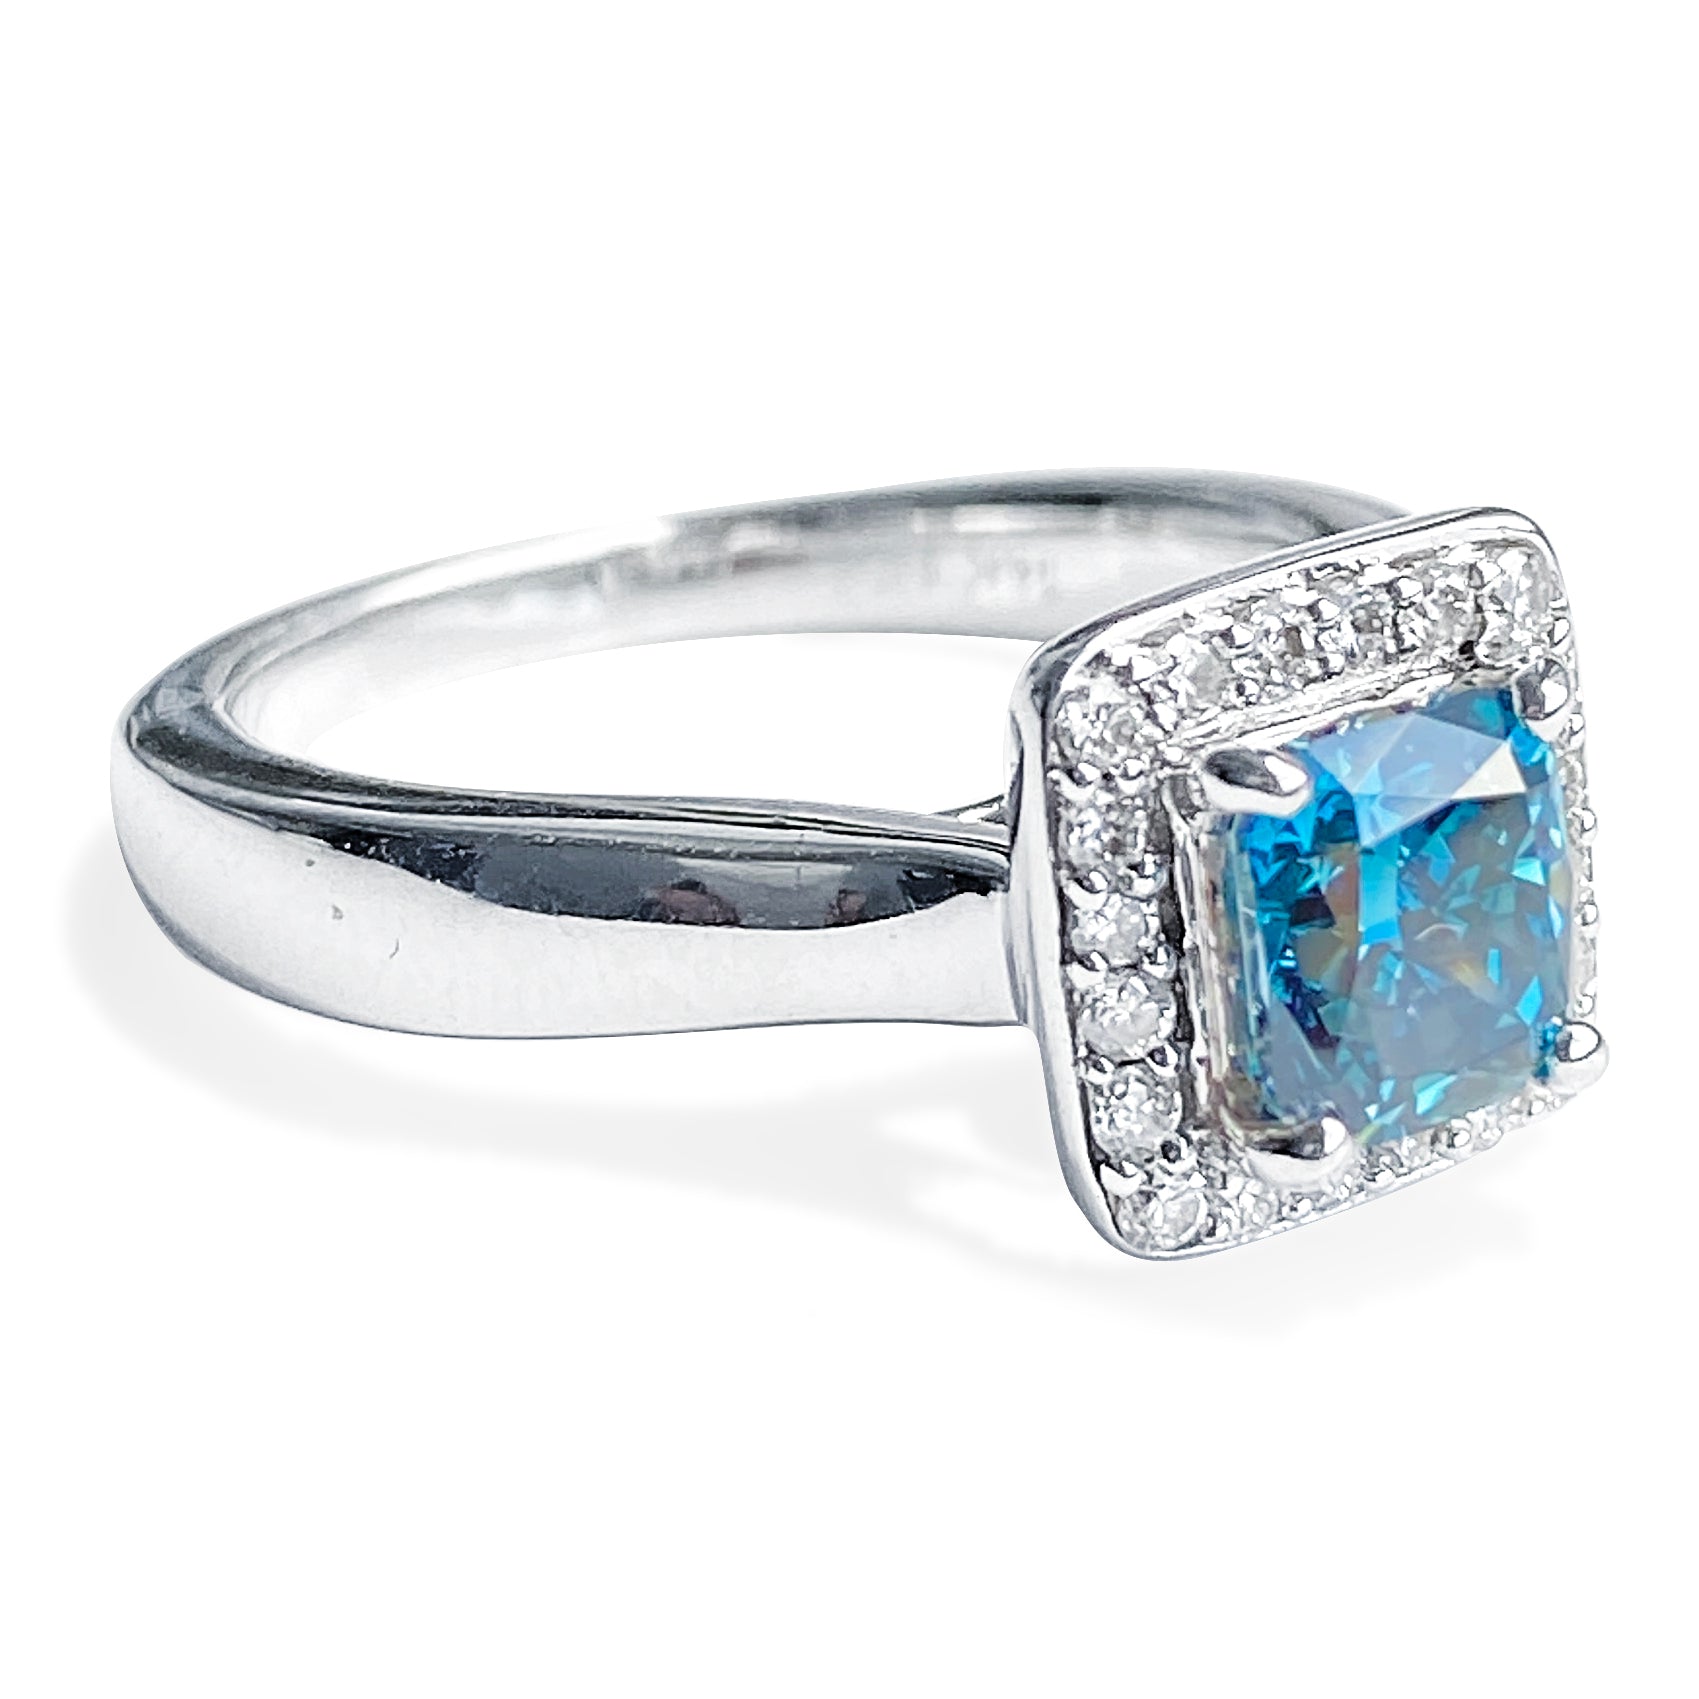 1.11 Carat Fancy Blue Cushion Diamond Halo Ring